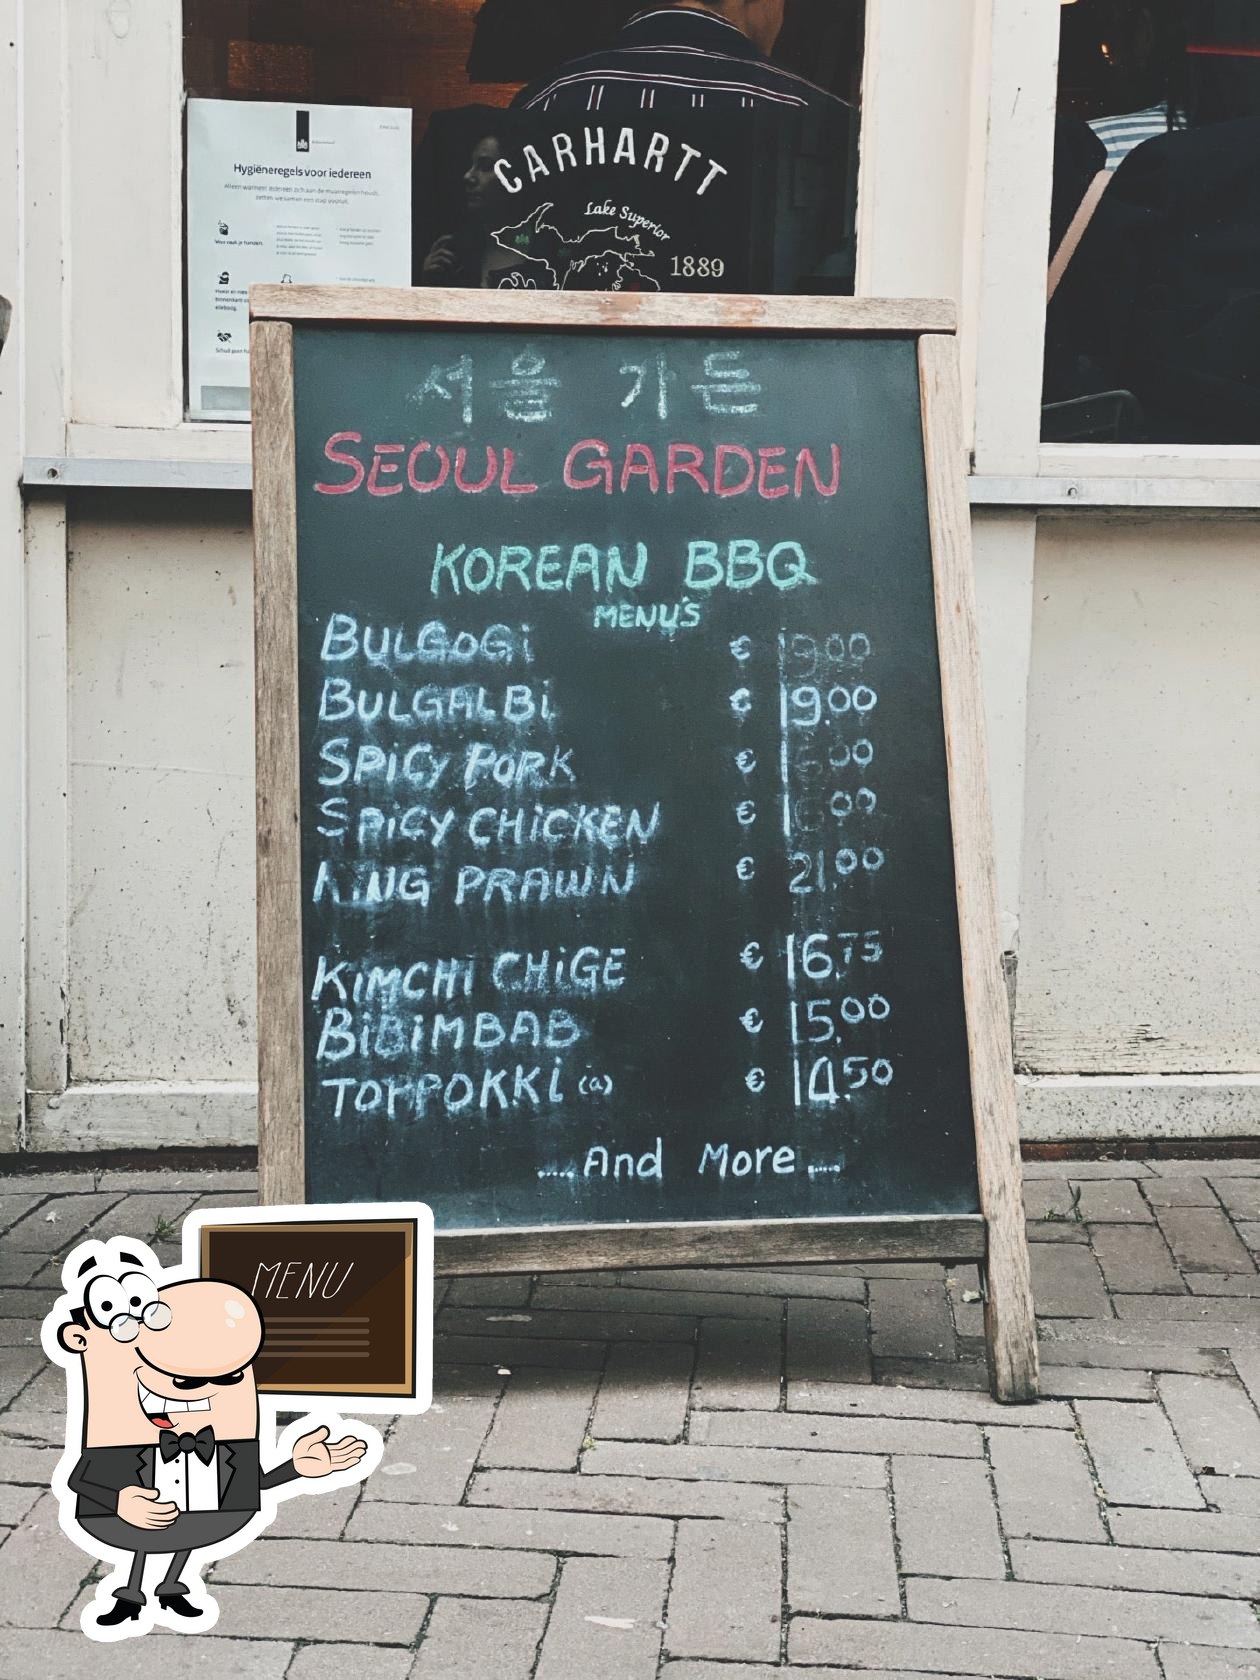 Seoul garden buffet price